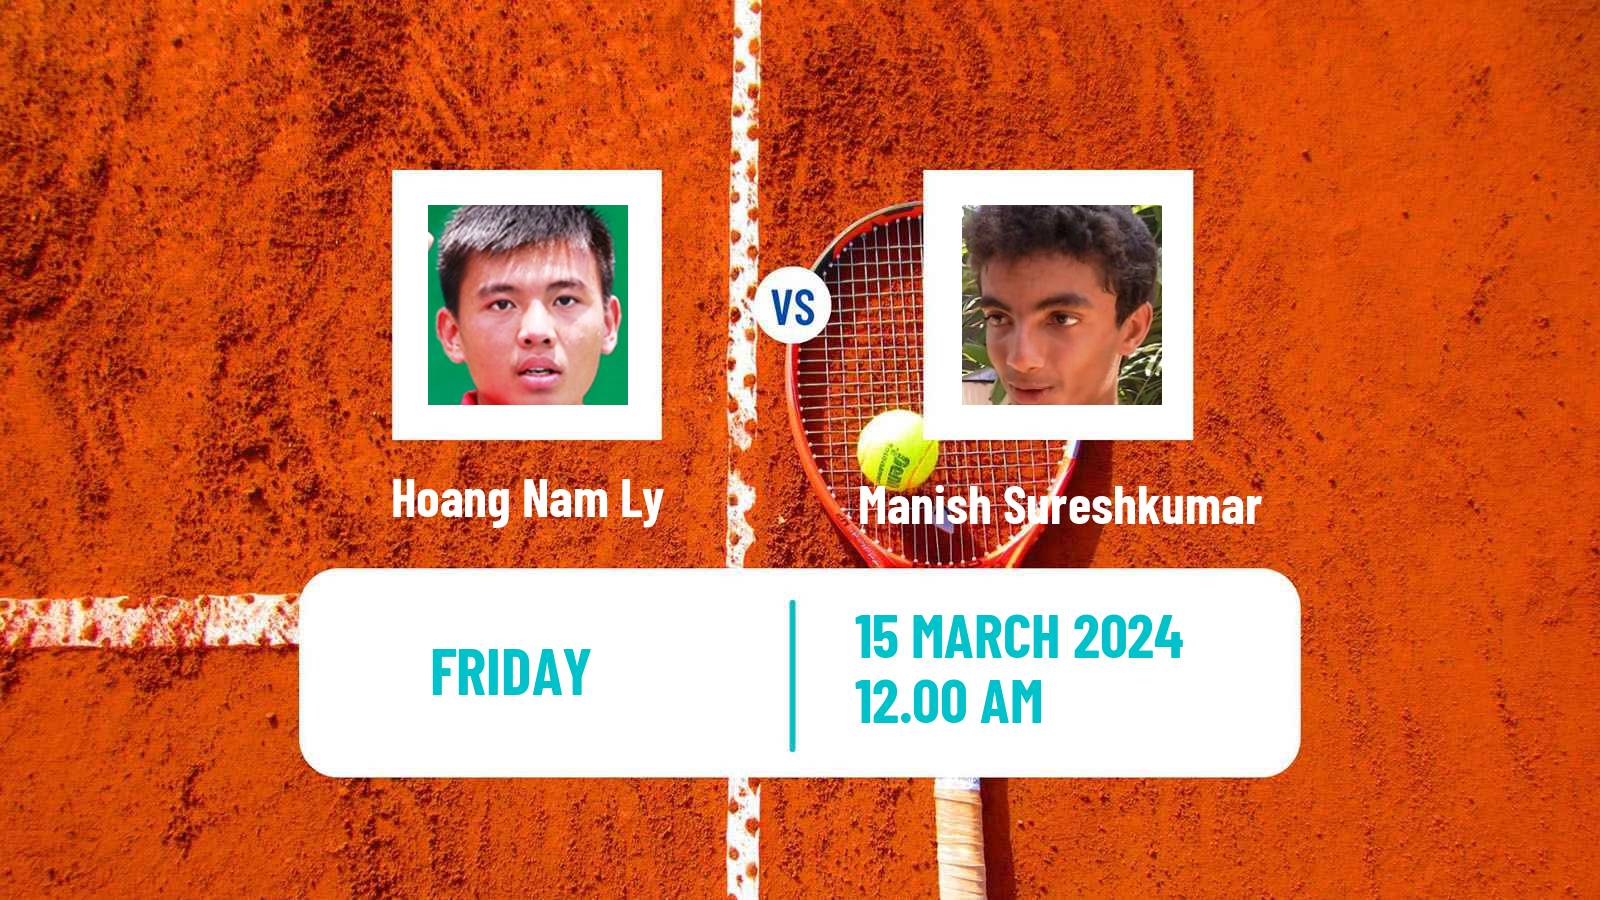 Tennis ITF M25 New Delhi Men Hoang Nam Ly - Manish Sureshkumar